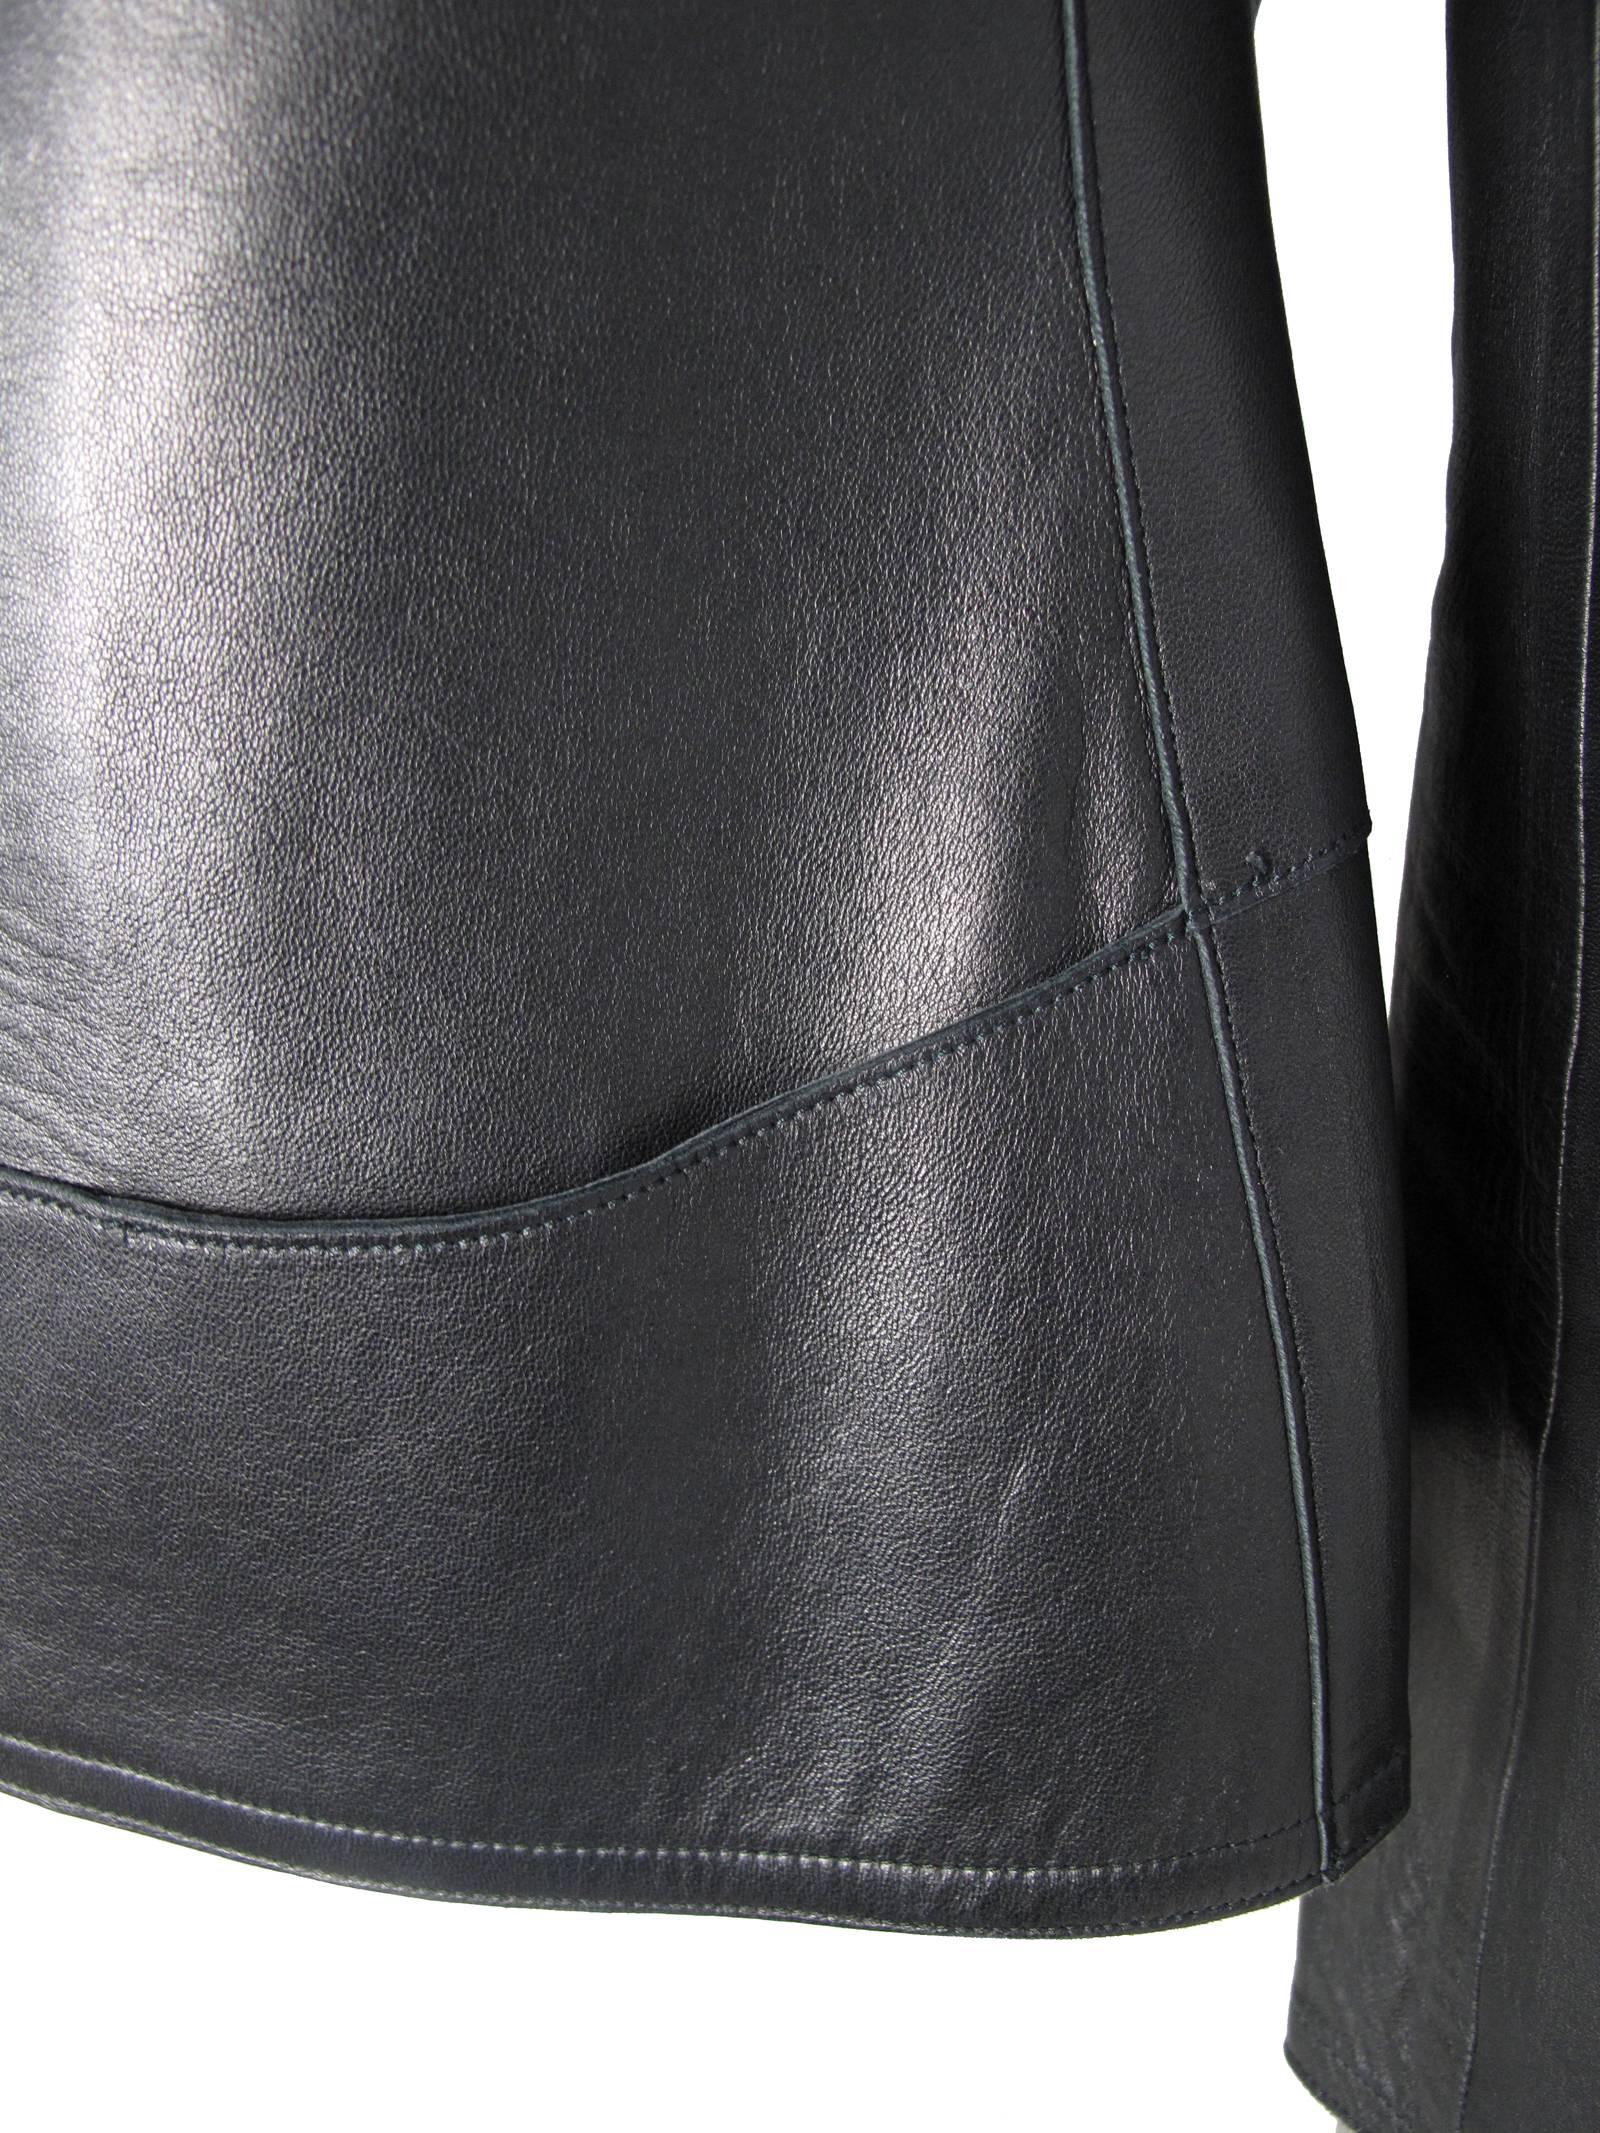 Chanel Black Leather Jacket 3